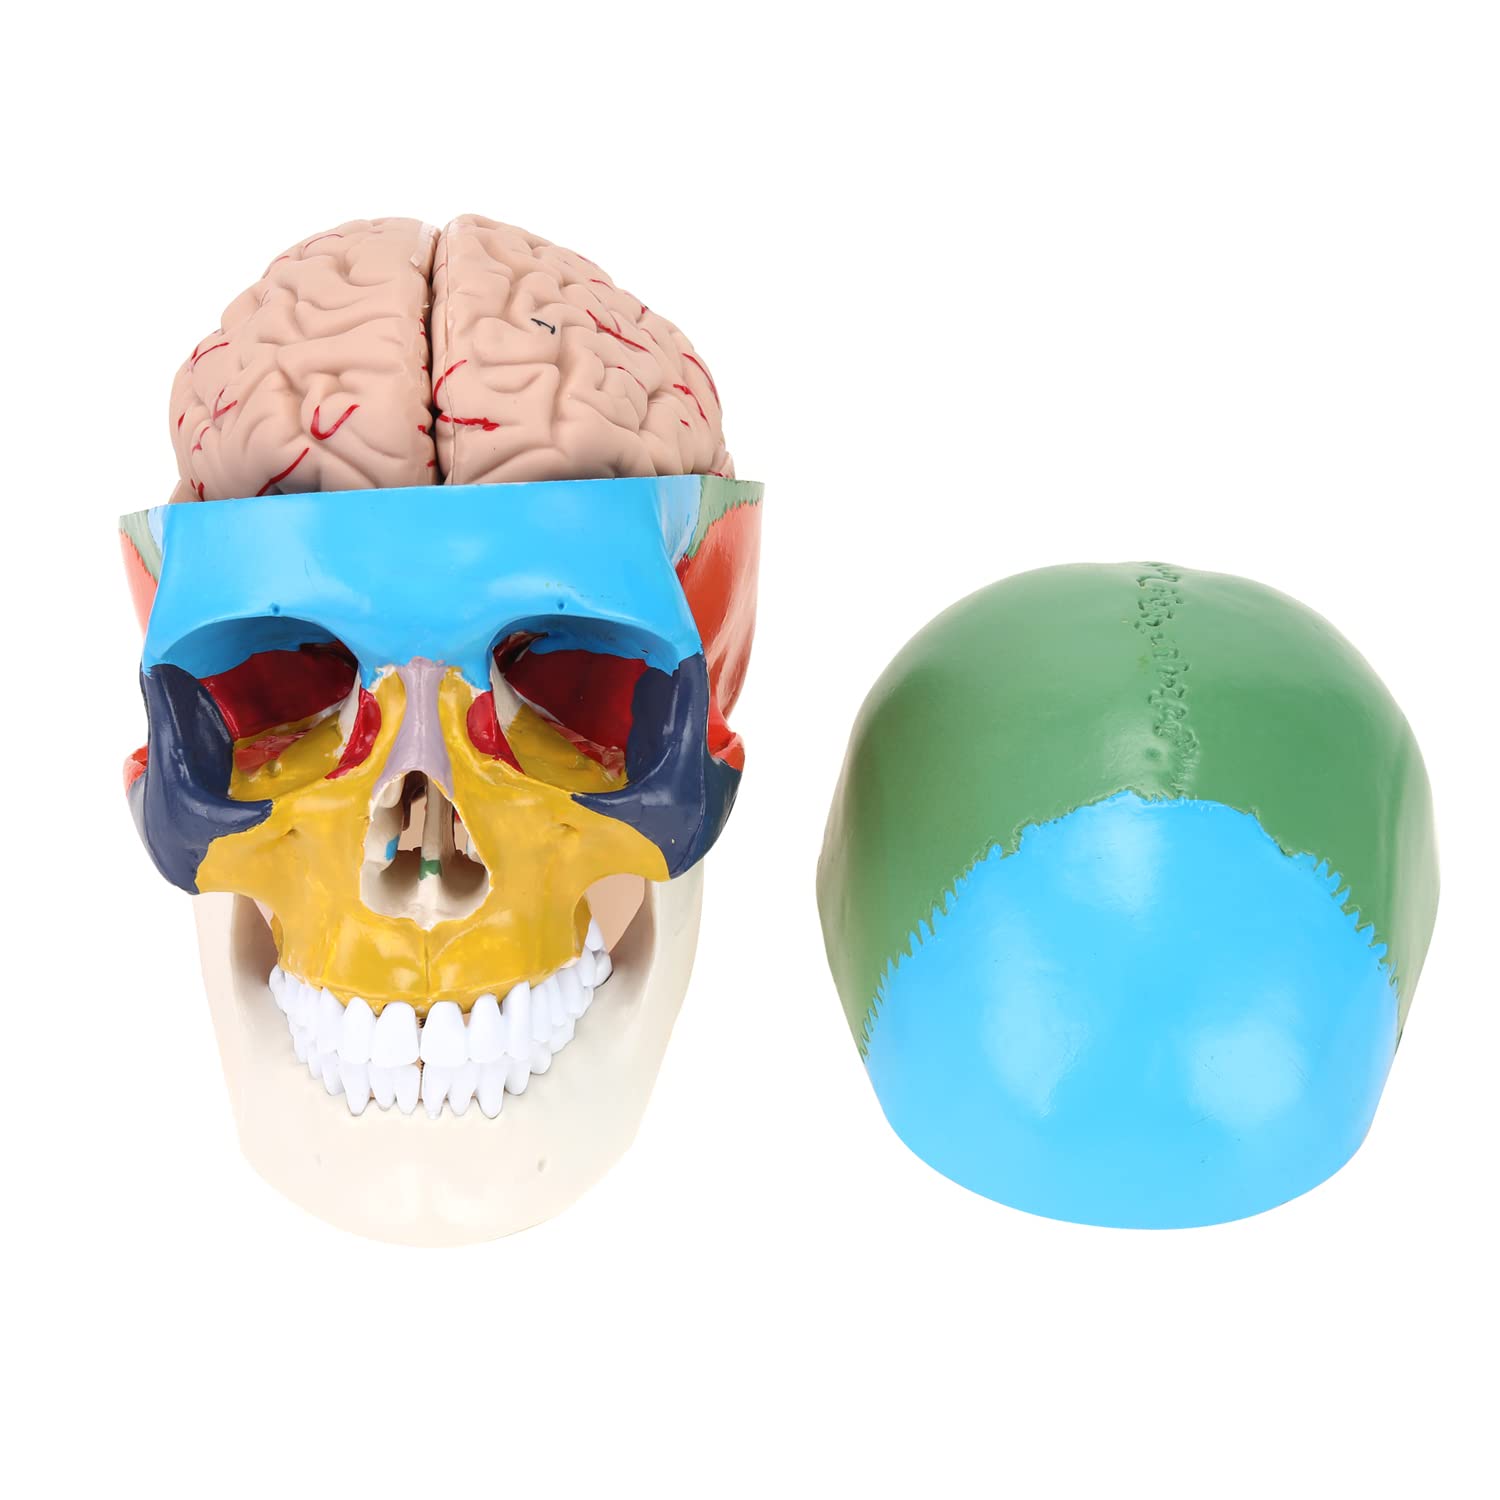 Human Skull Model With Brain, Health Edco